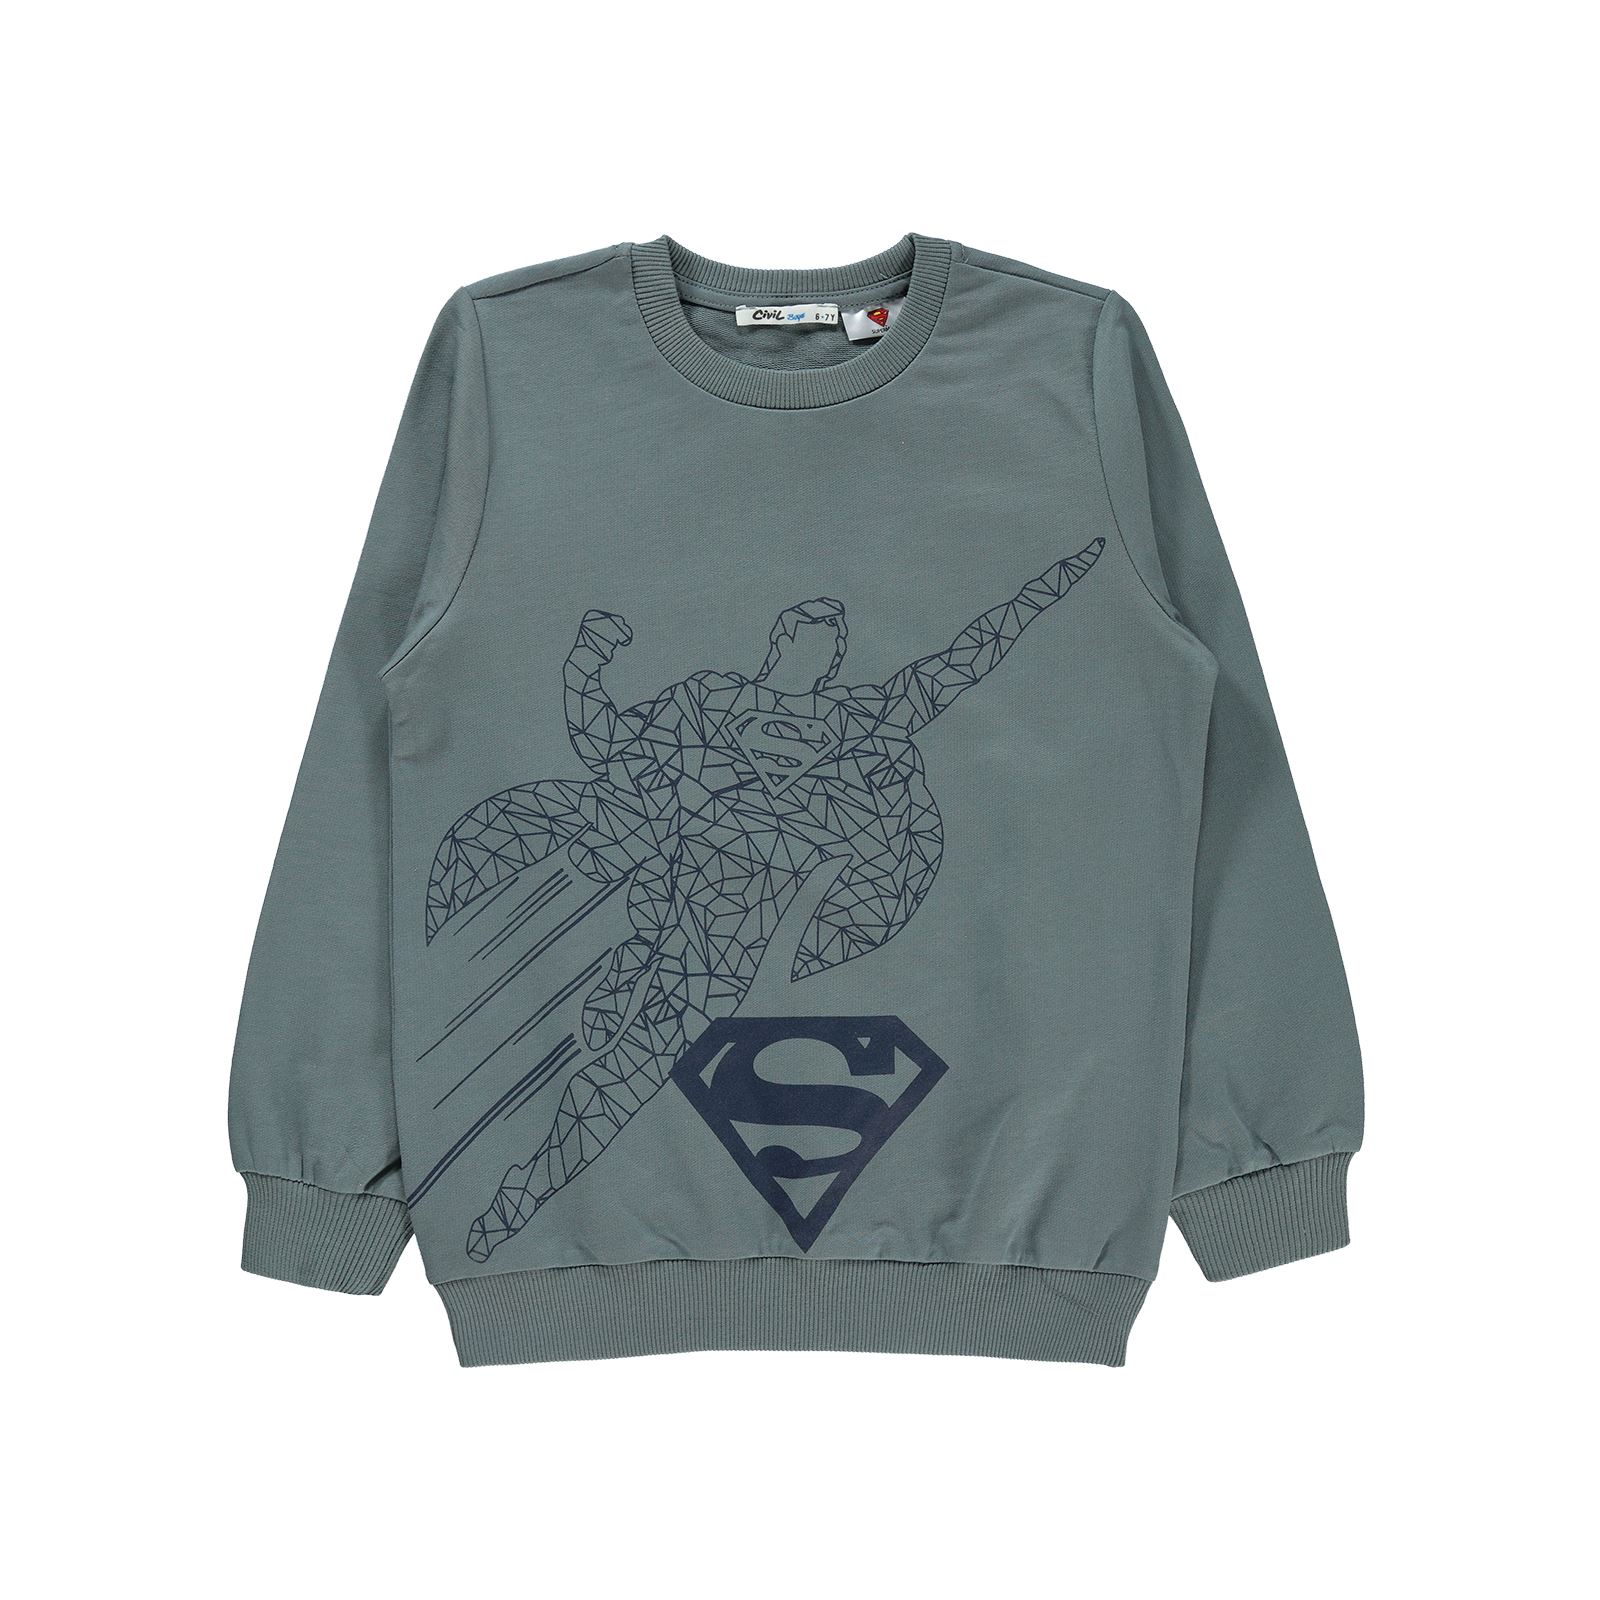 Superman Erkek Çocuk Sweatshirt 6-9 Yaş Gri